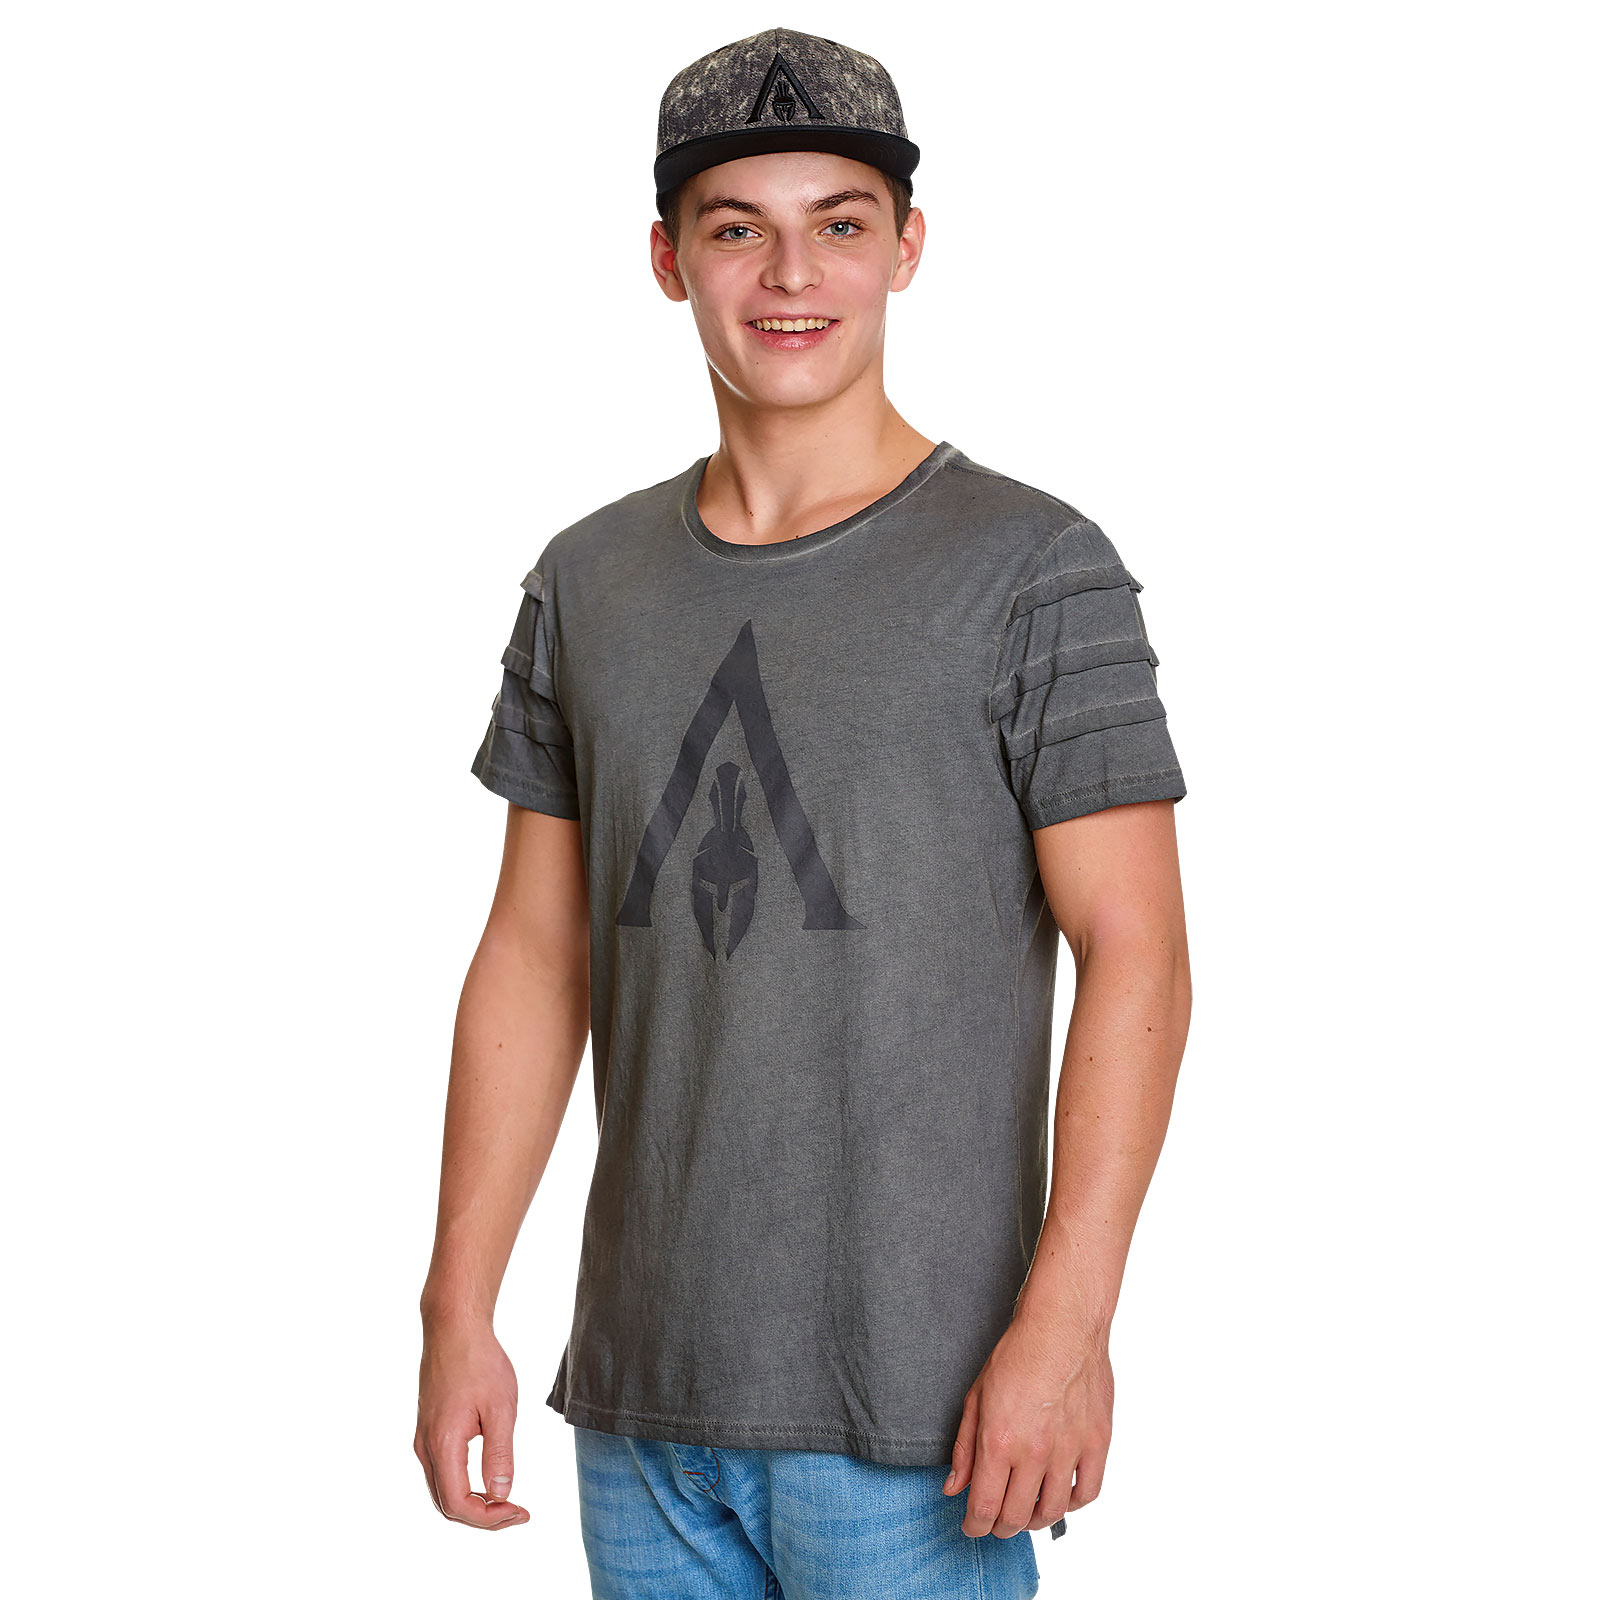 Assassins Creed - Odyssey Logo T-Shirt grey